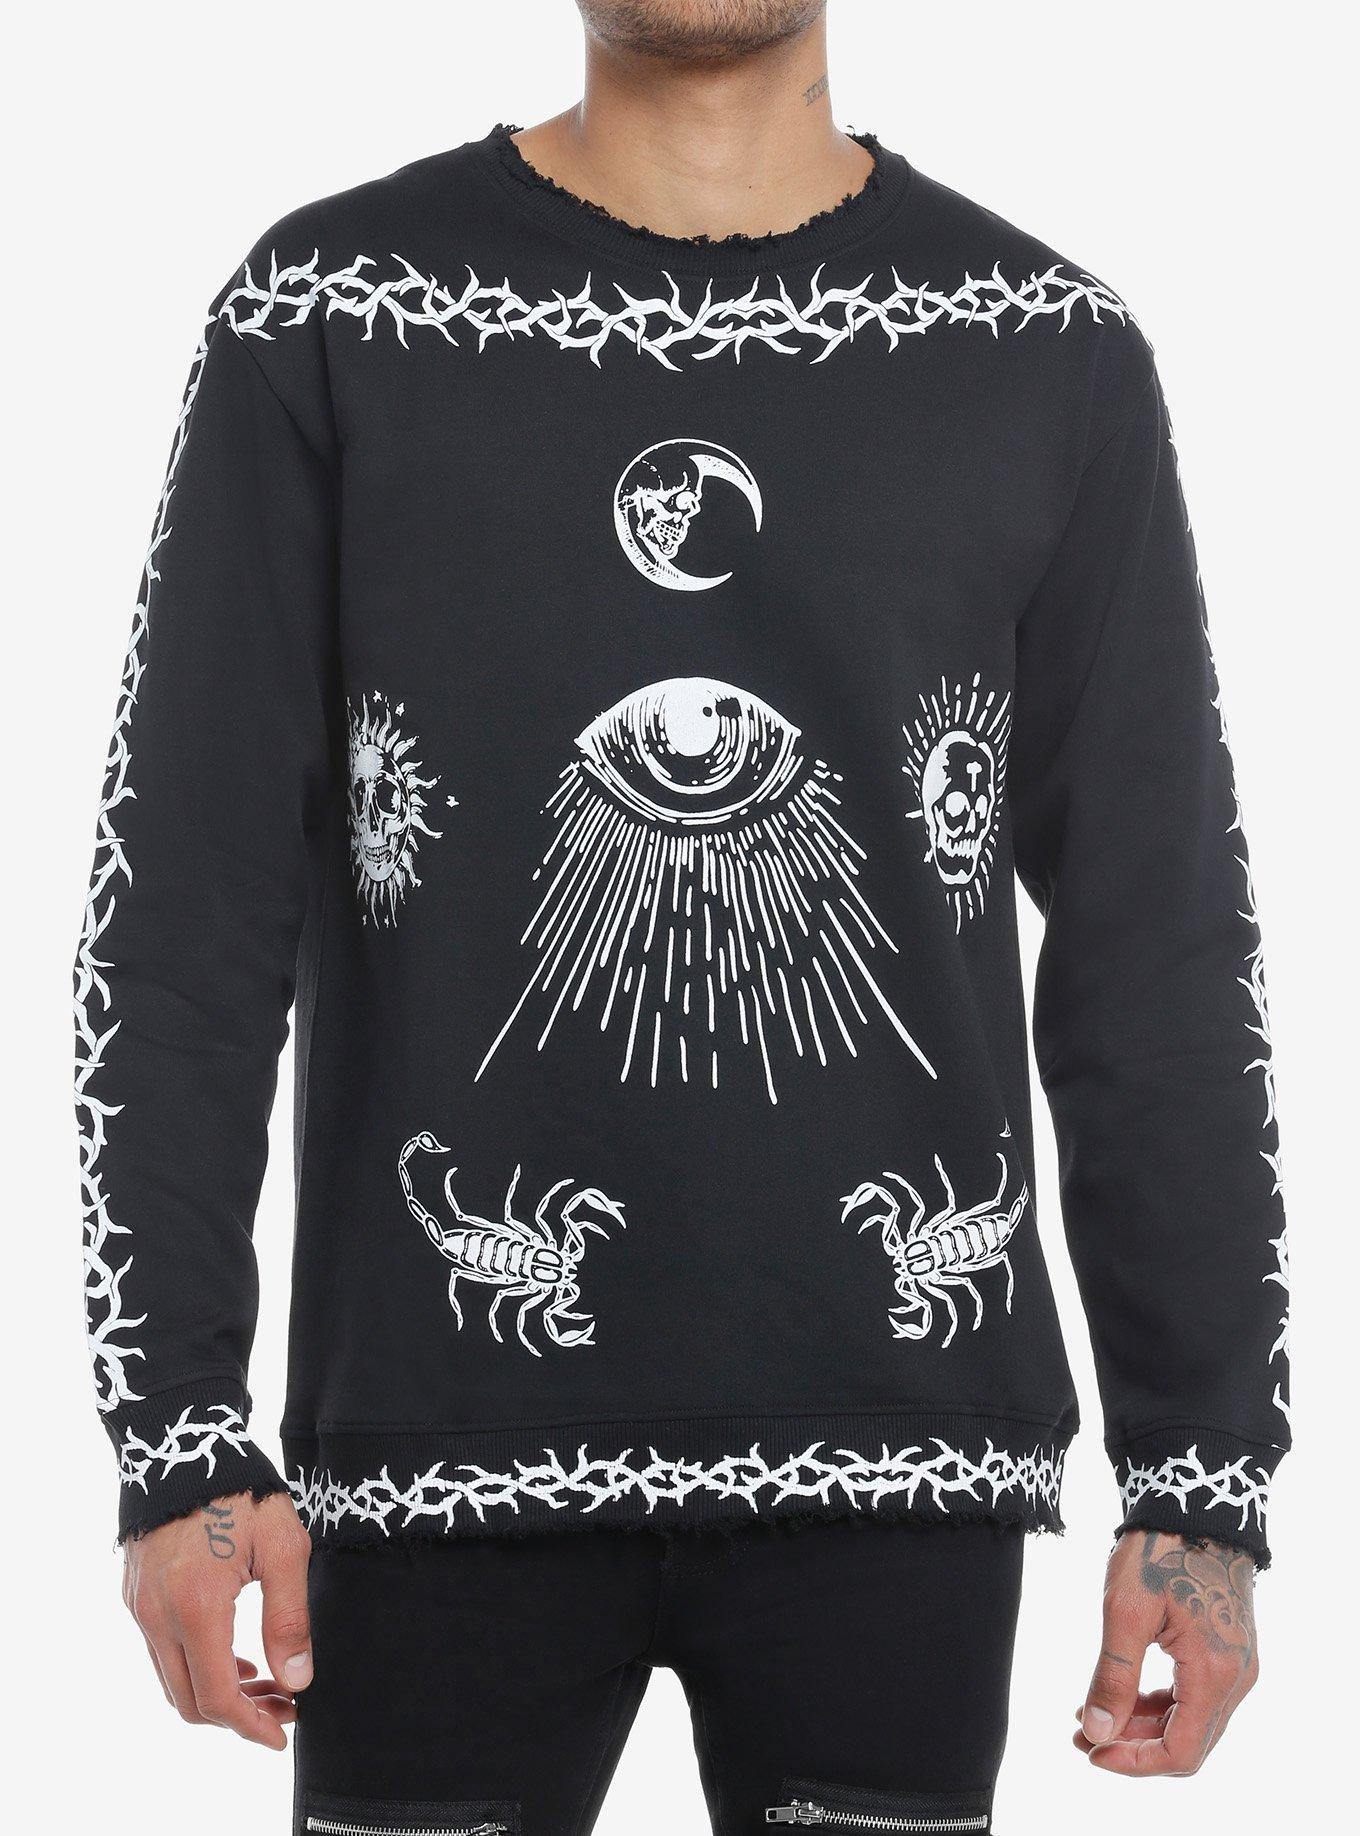 Vines Occult Symbols Long-Sleeve Sweatshirt, GREY, hi-res